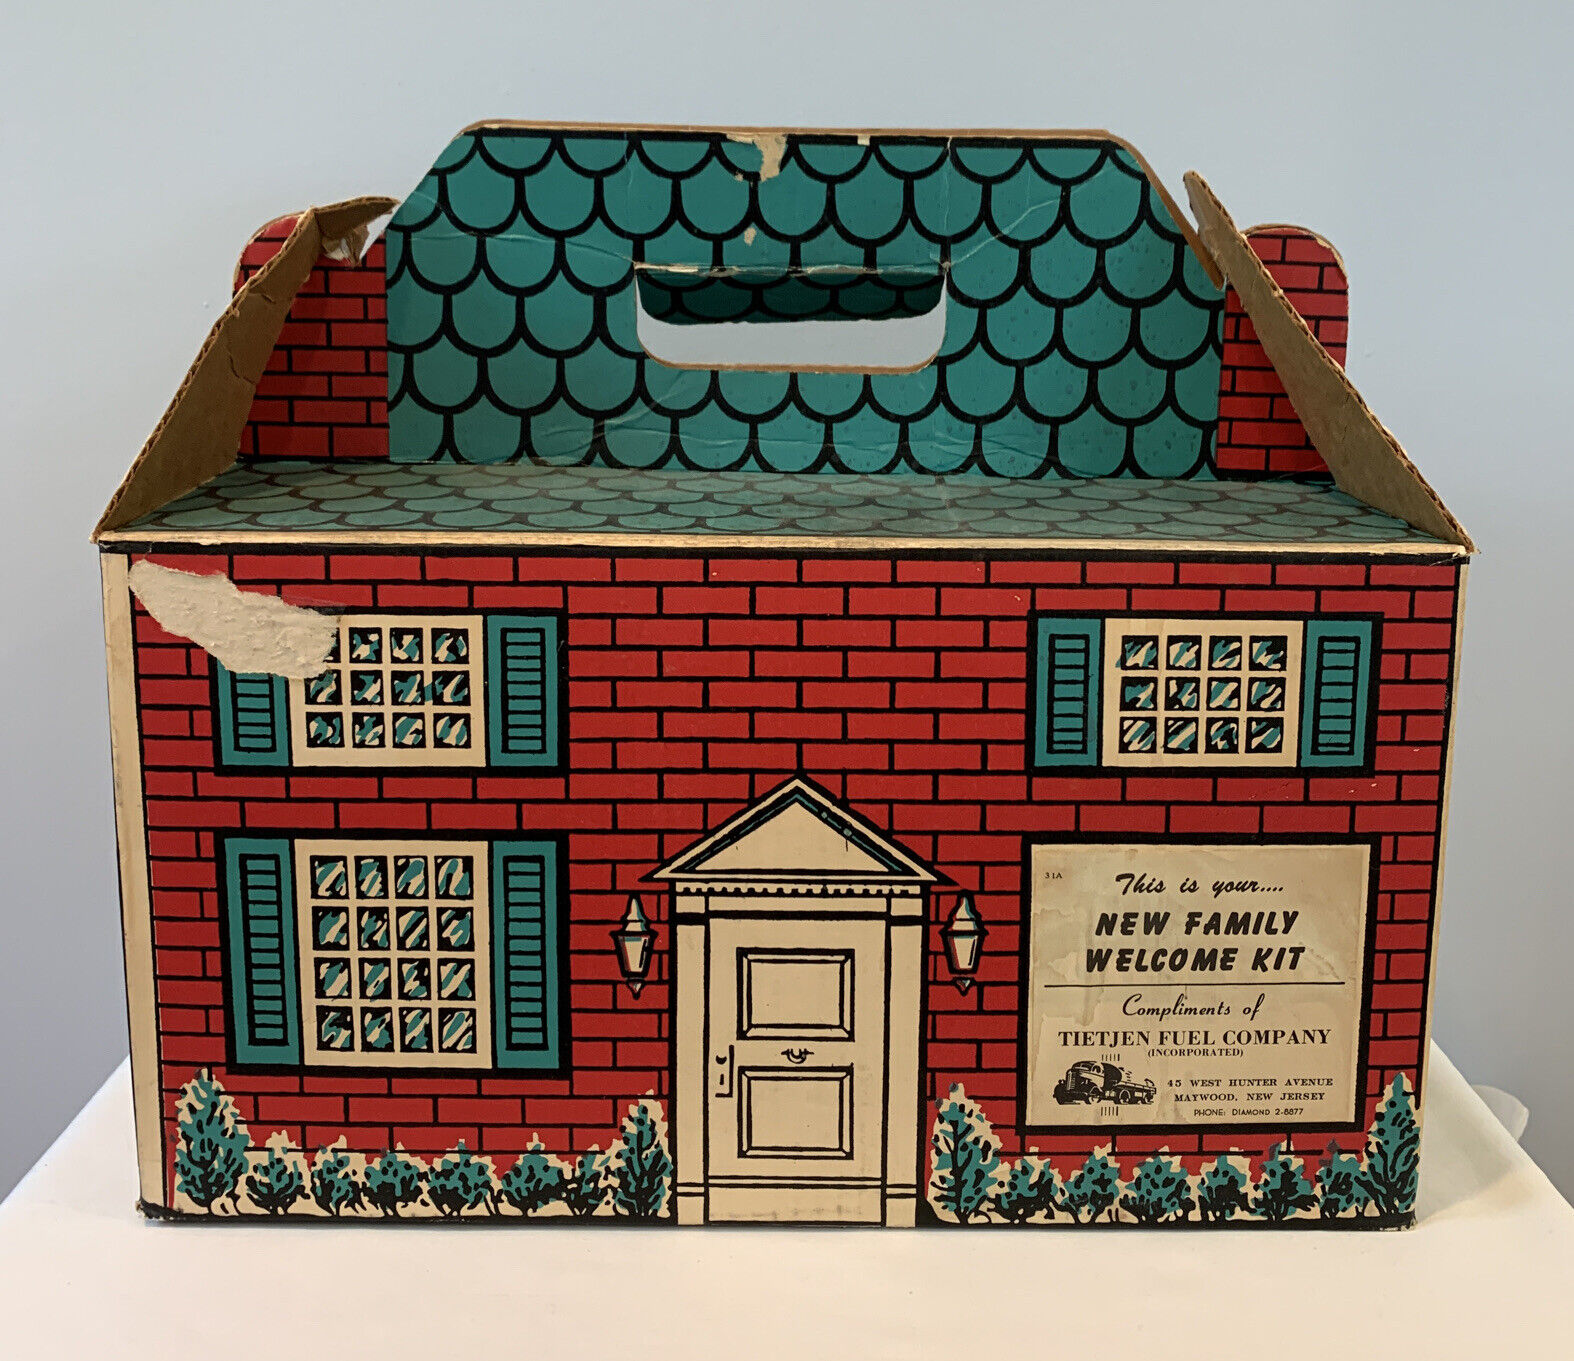 1940s New Family Welcome Kit To Neighborhood Box From Tietjen Fuel Company NJ